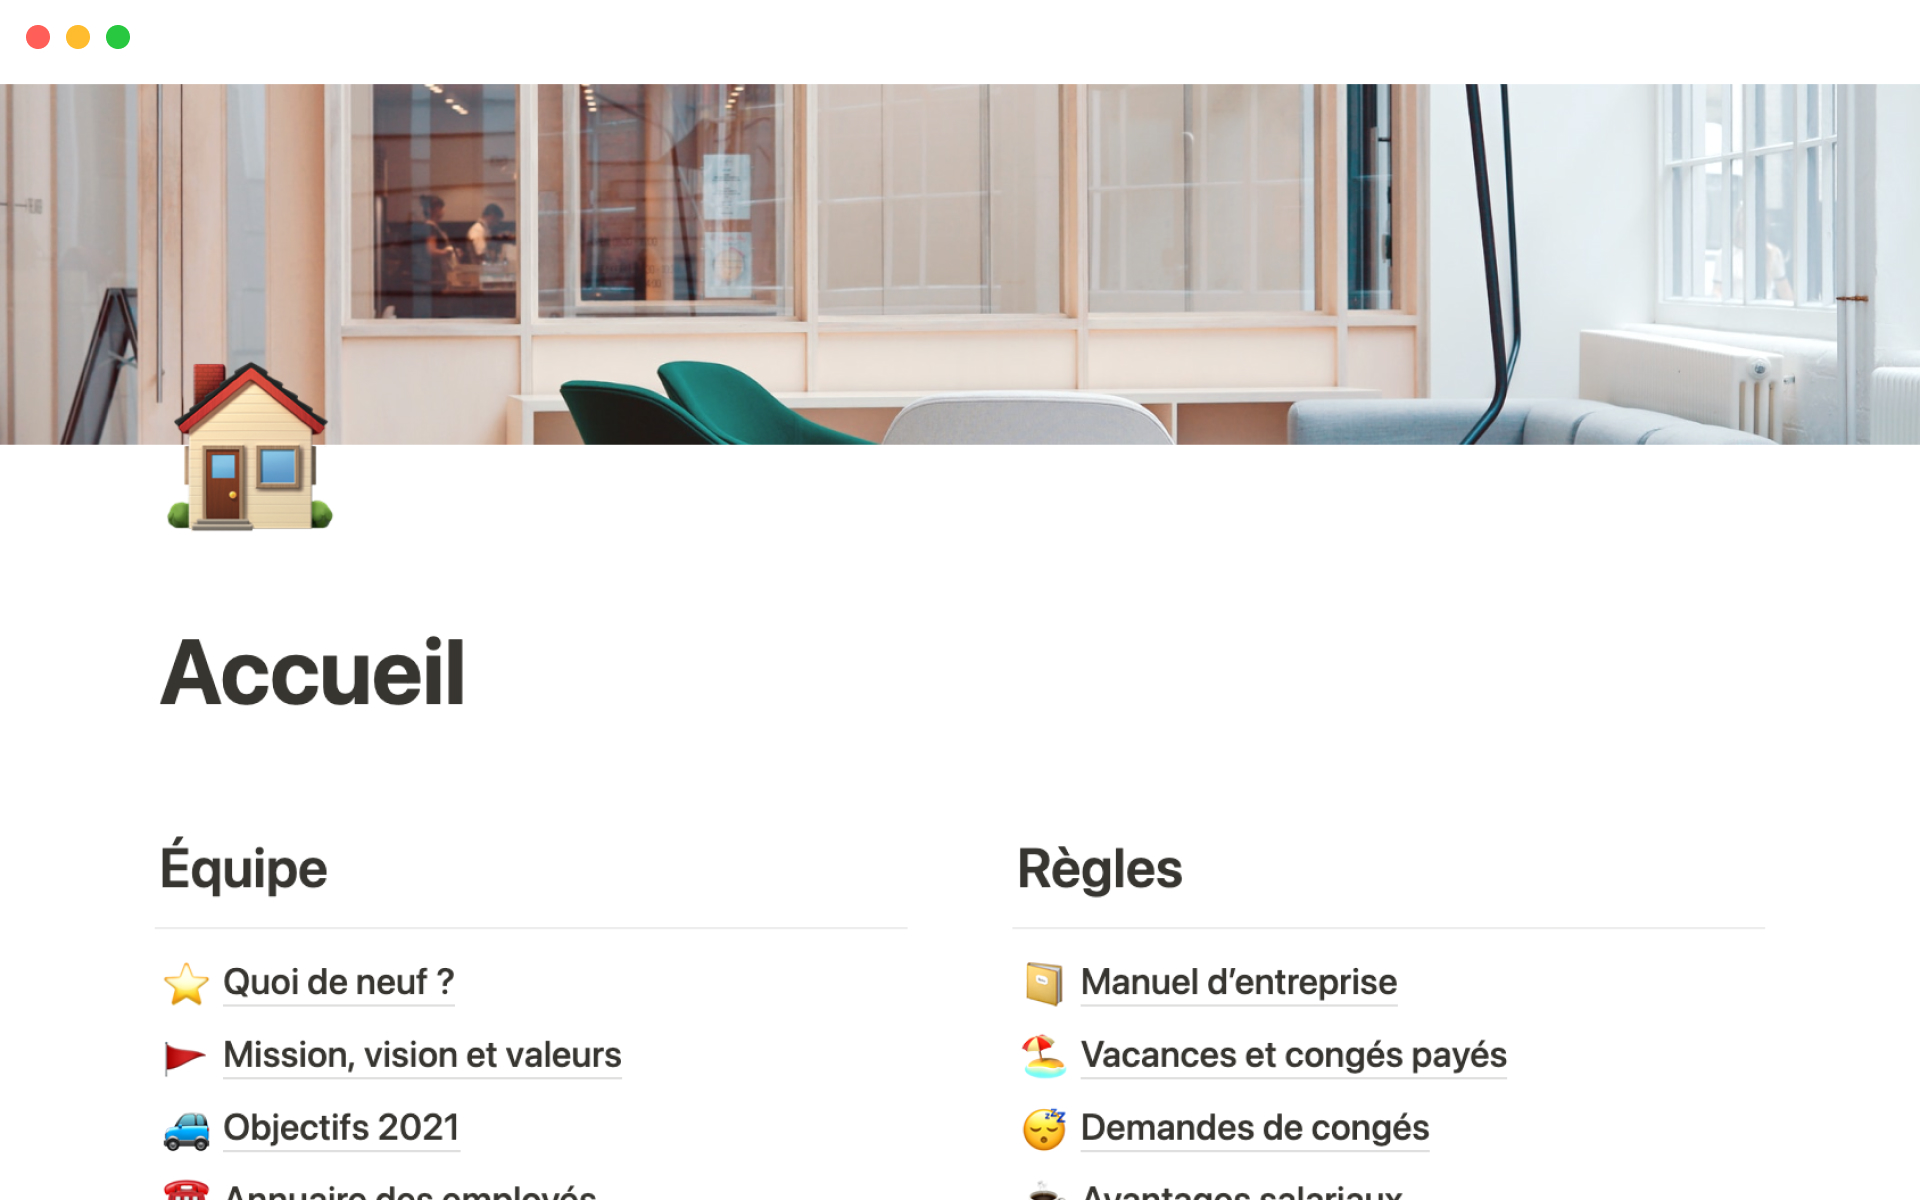 Company home page template